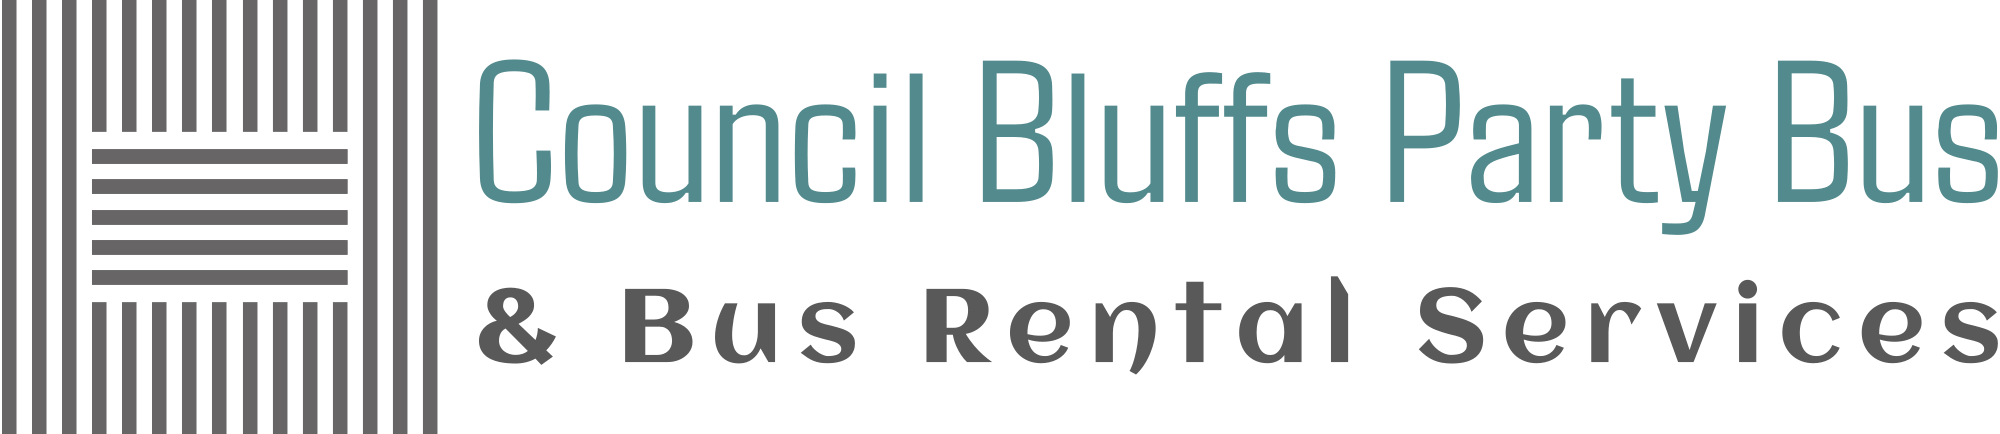 Party Bus Council Bluffs logo